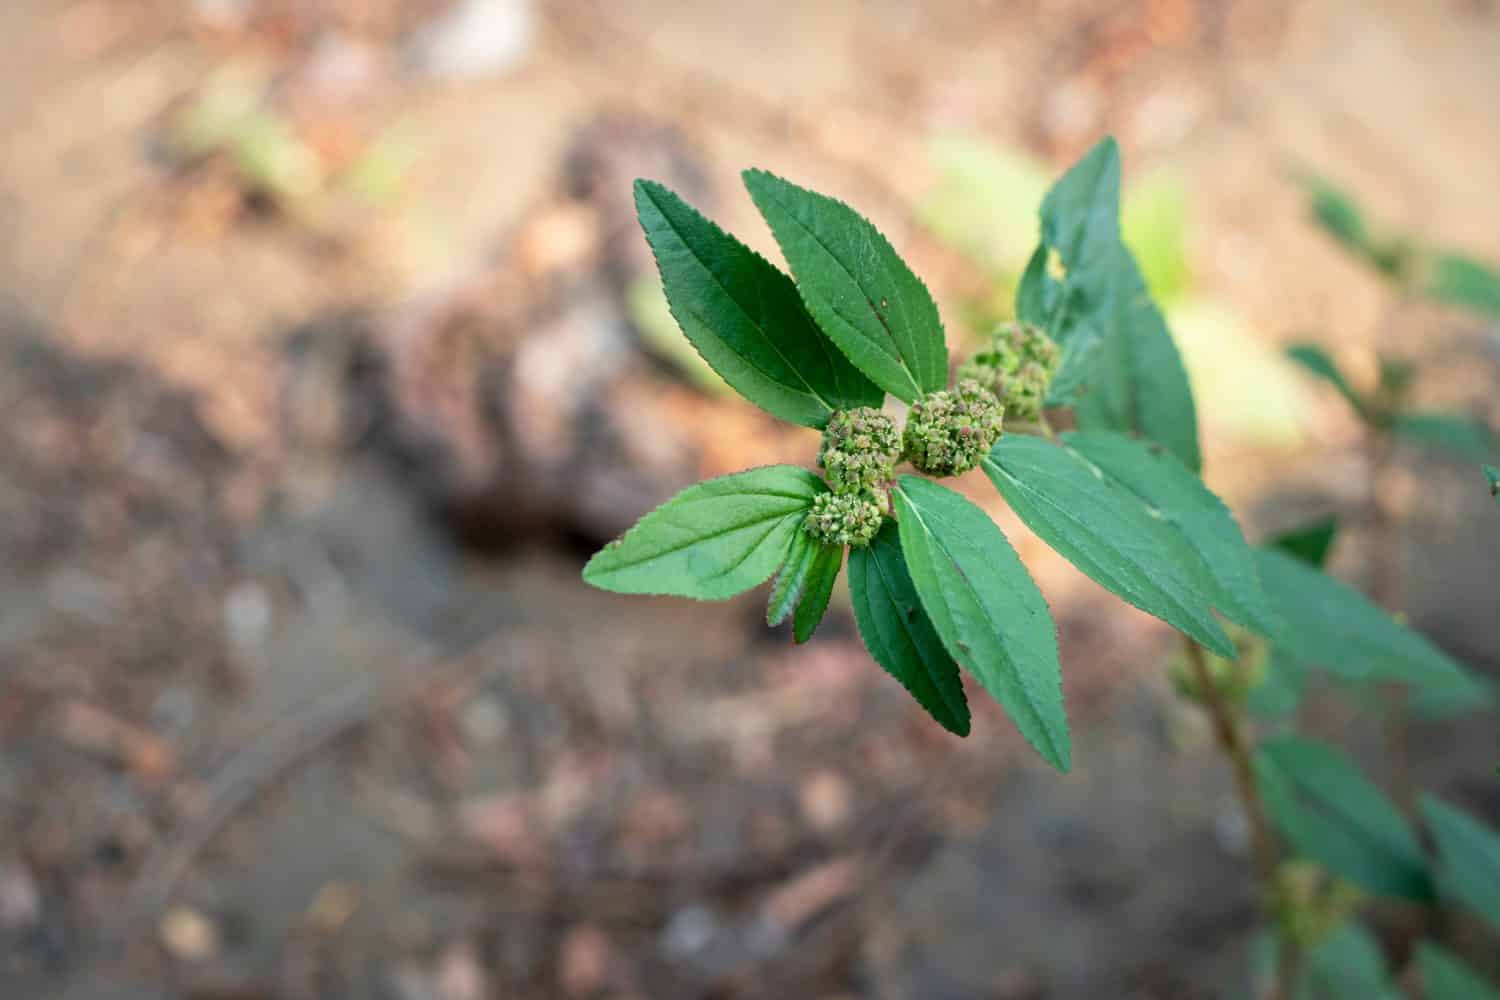 Patikan kebo leaves ( Euphorbia hirta L,Garden spurge, Asthma weed, Snake weed, Milkweeds ) are a wild plant that can be used as herbal medicine